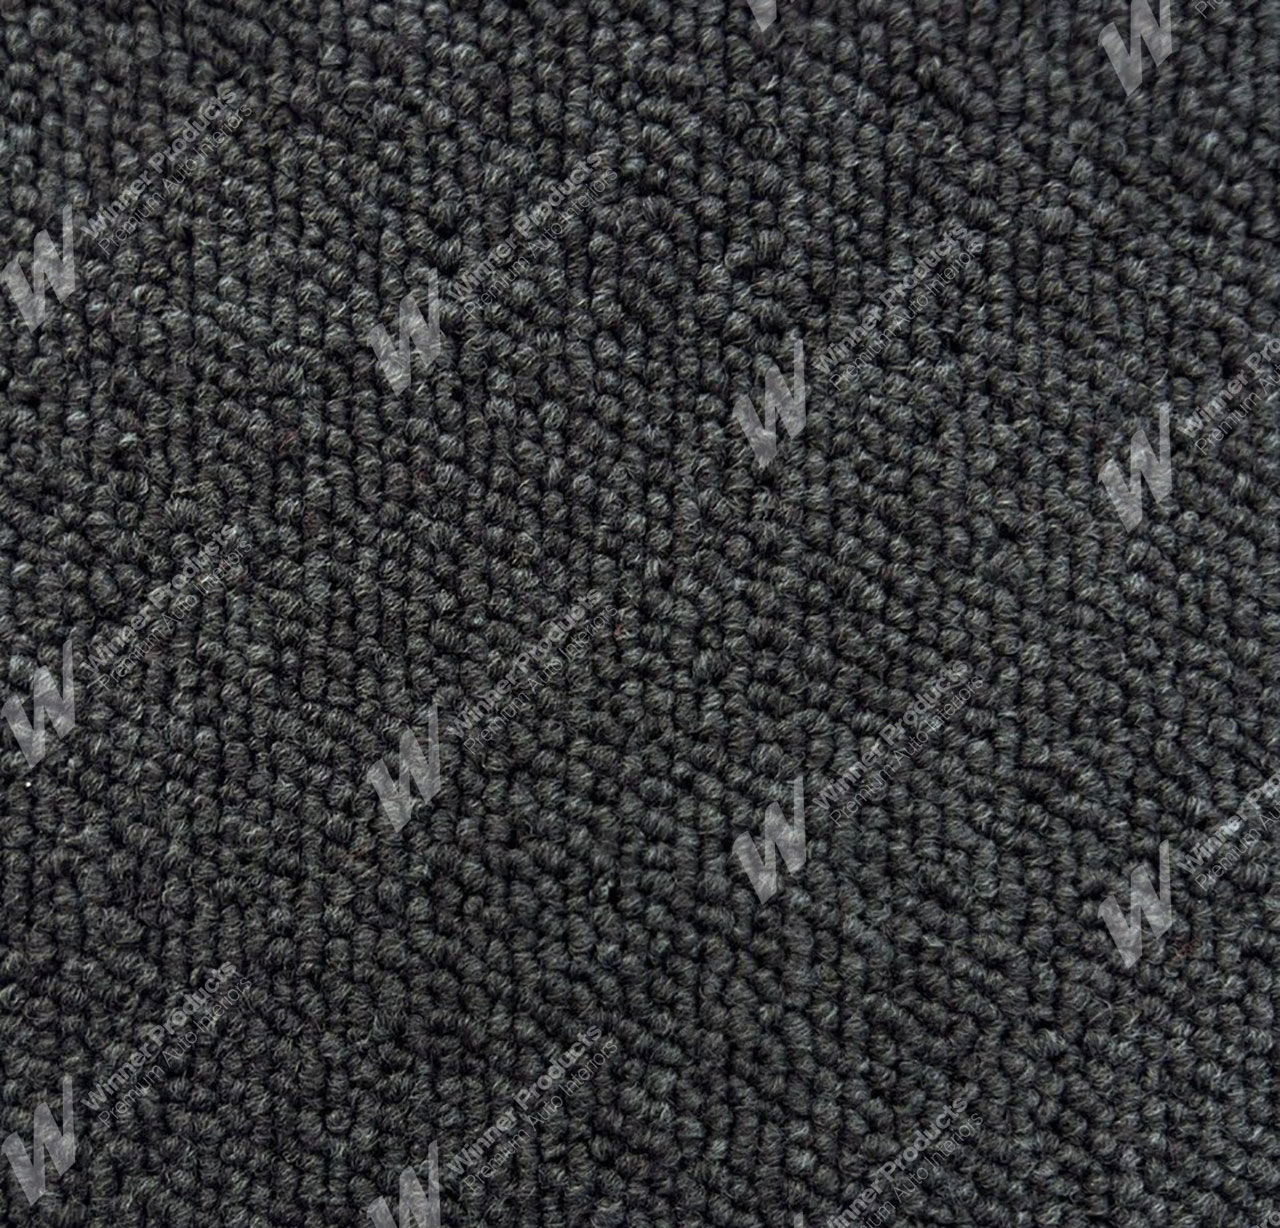 Holden Premier HJ Premier Wagon 14X Dove Grey & Cloth Carpet (Image 1 of 1)